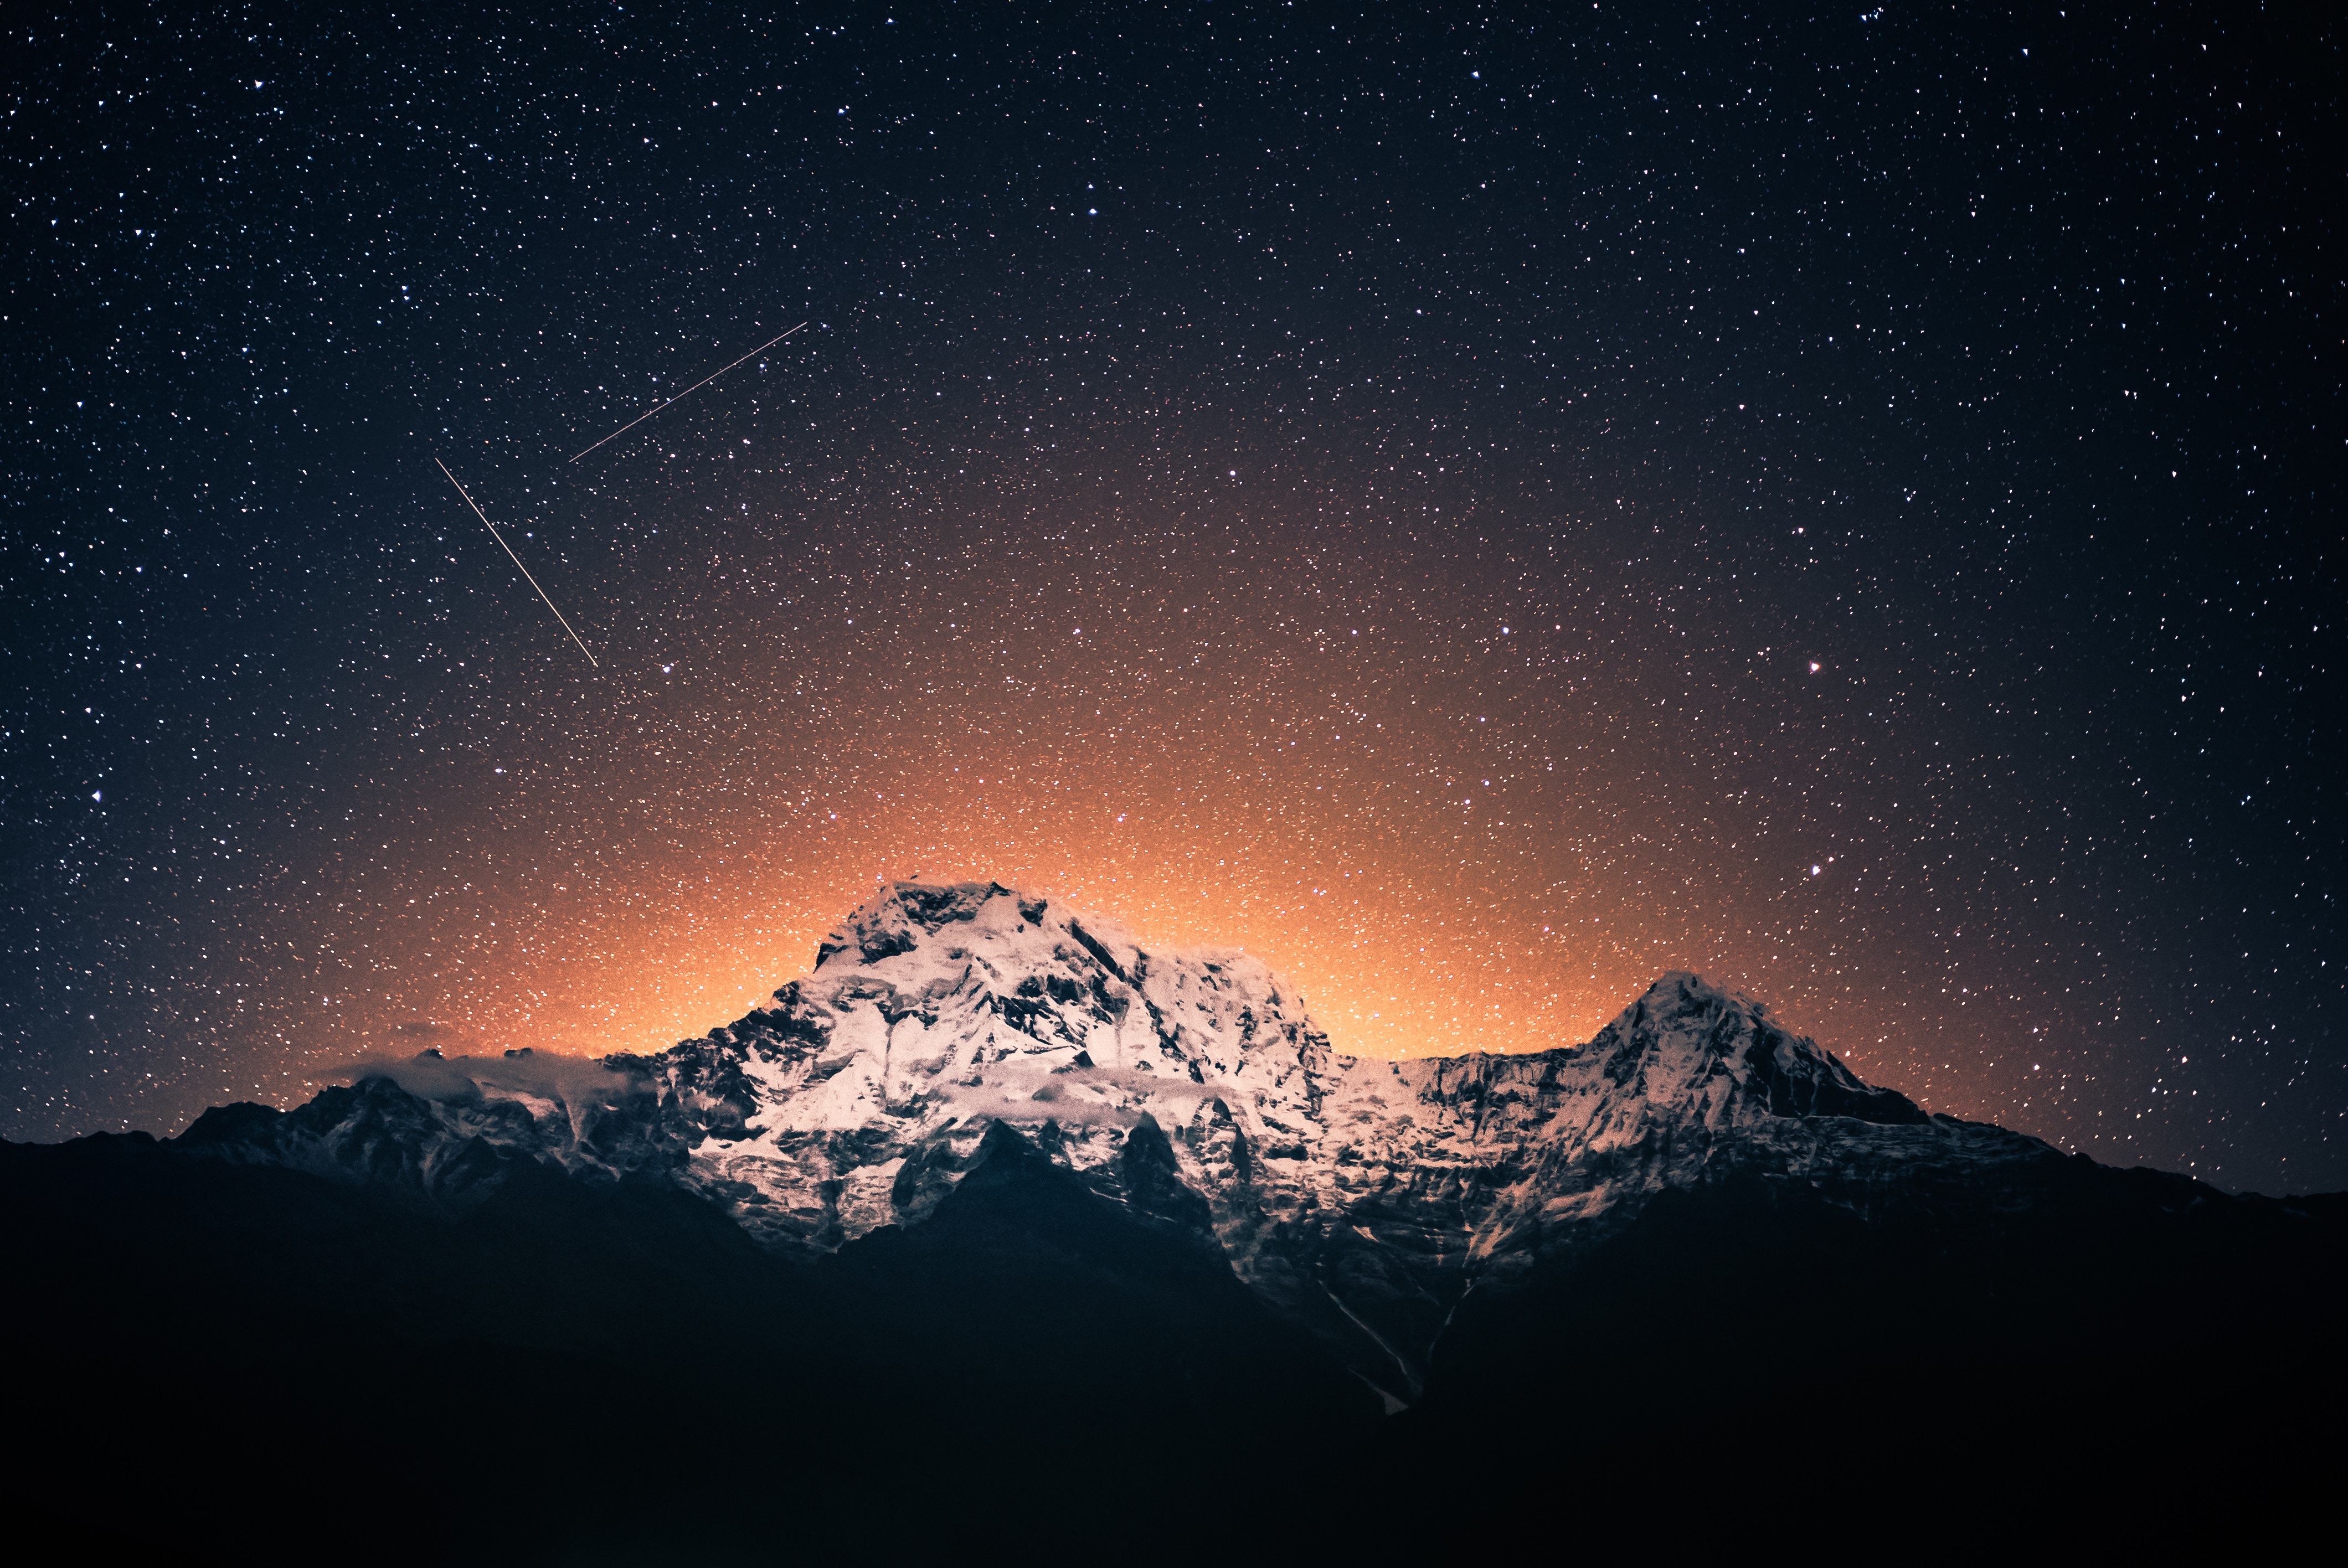 General 4240x2832 Ghandruk Nepal night sky night sky landscape outdoors stars space mountain top comet orange dusk ridge snow peak glowing long exposure nightscape starry night Himalayas